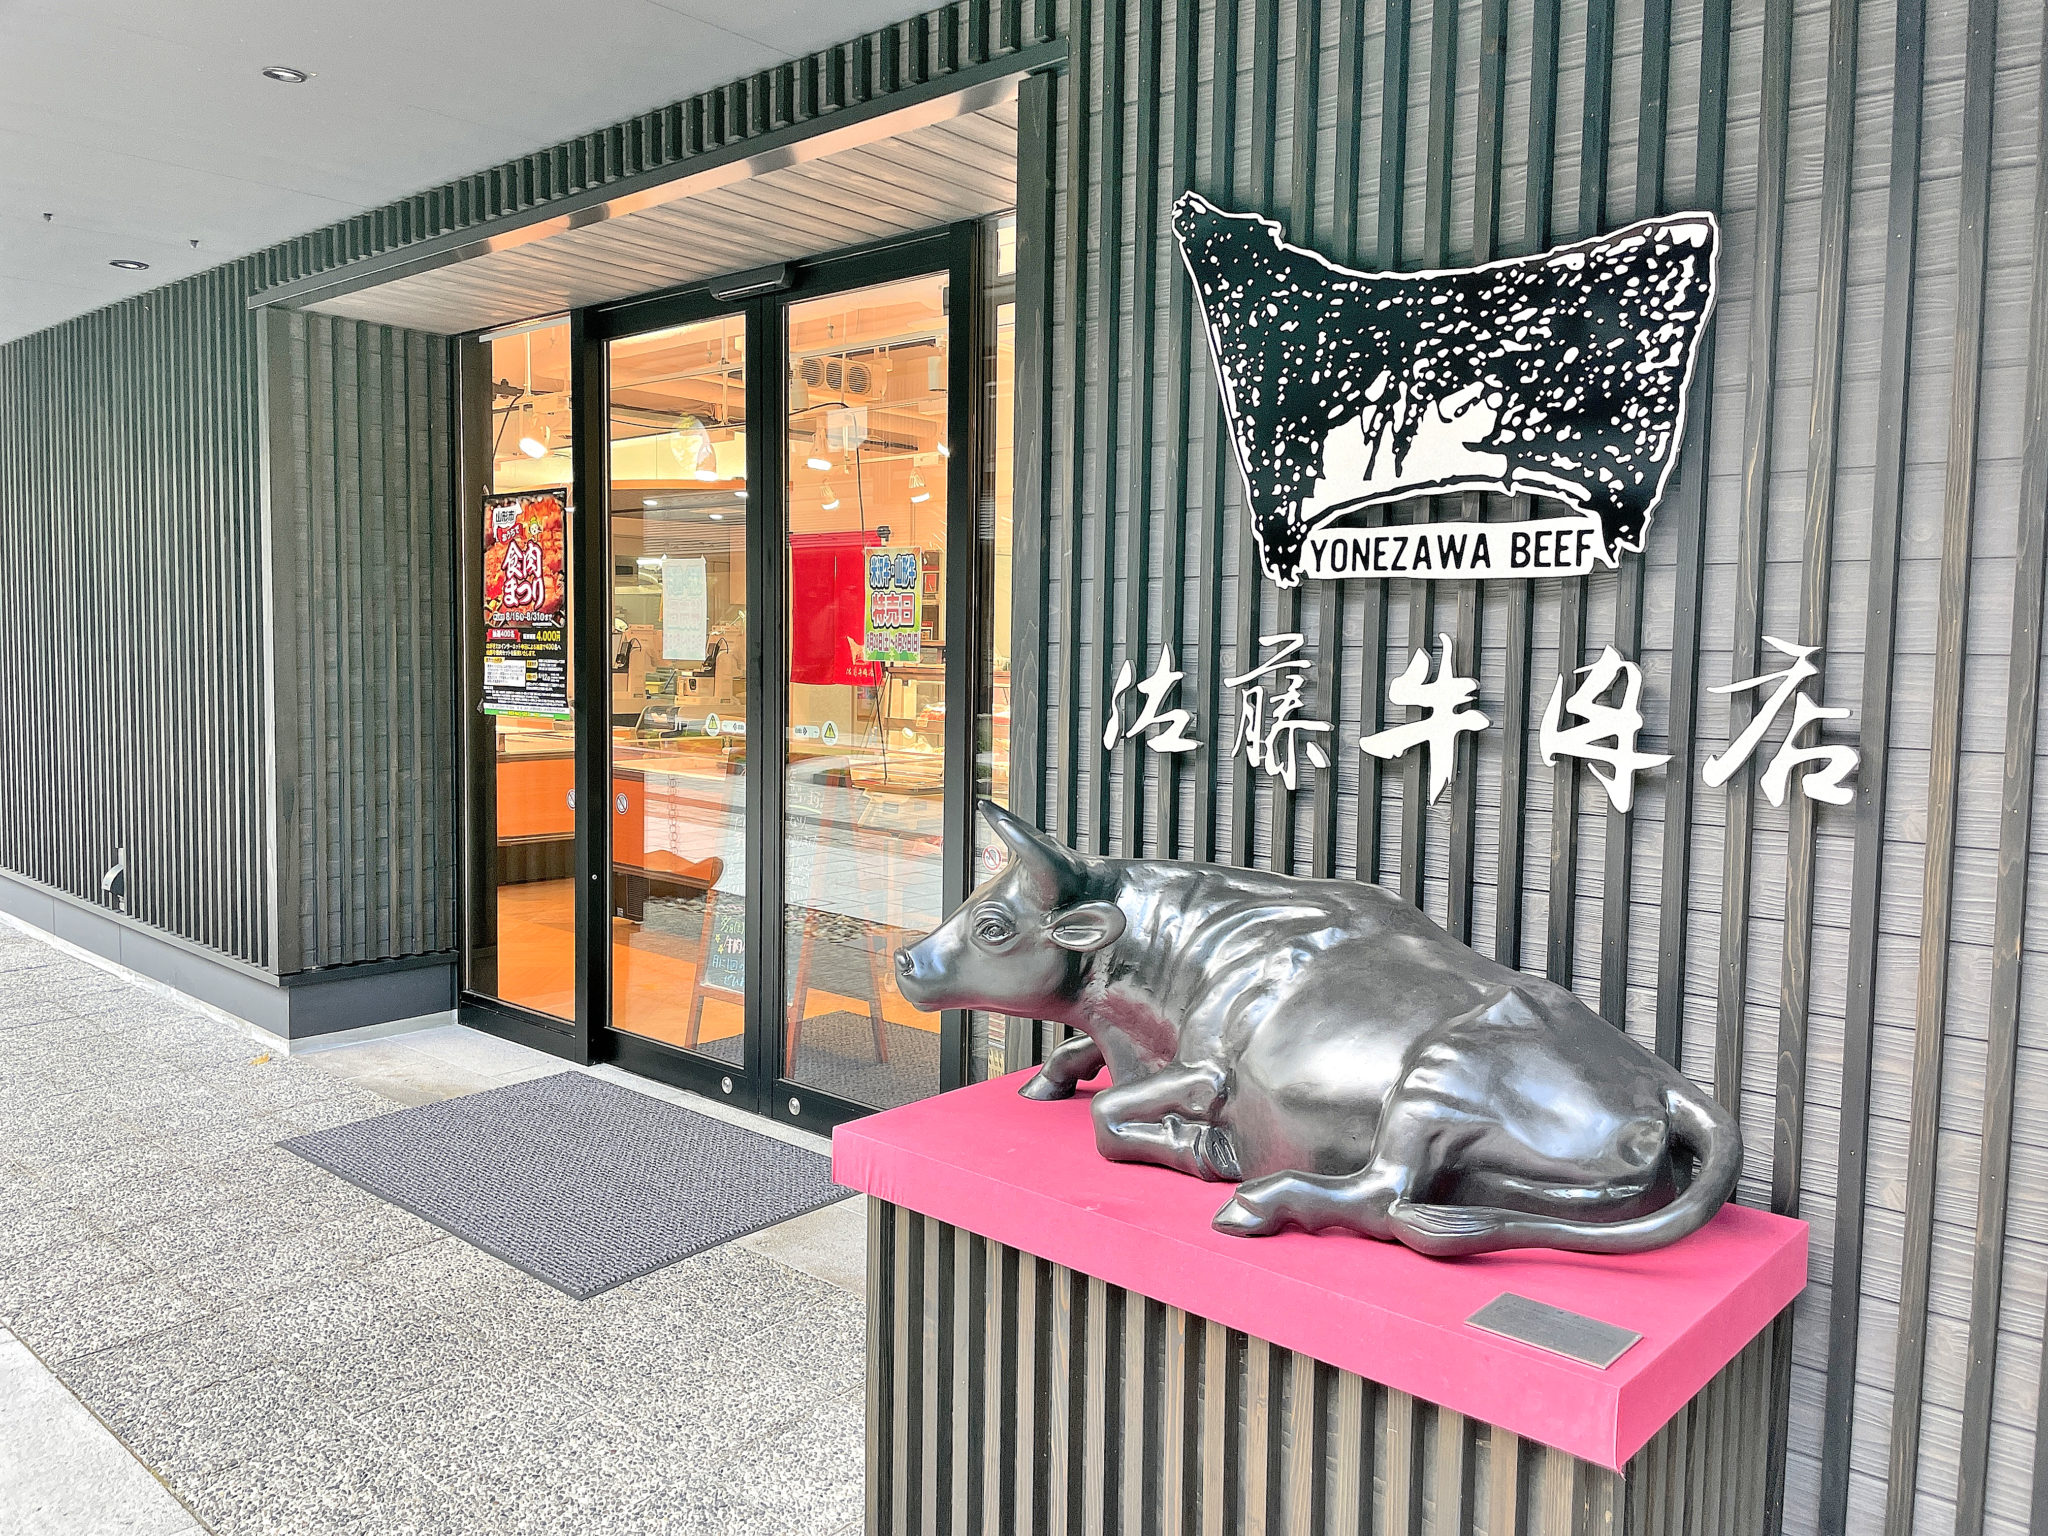 [Feature] Sato Gyuniku-ten! Meat shop with a new branch in downtown Yamagata